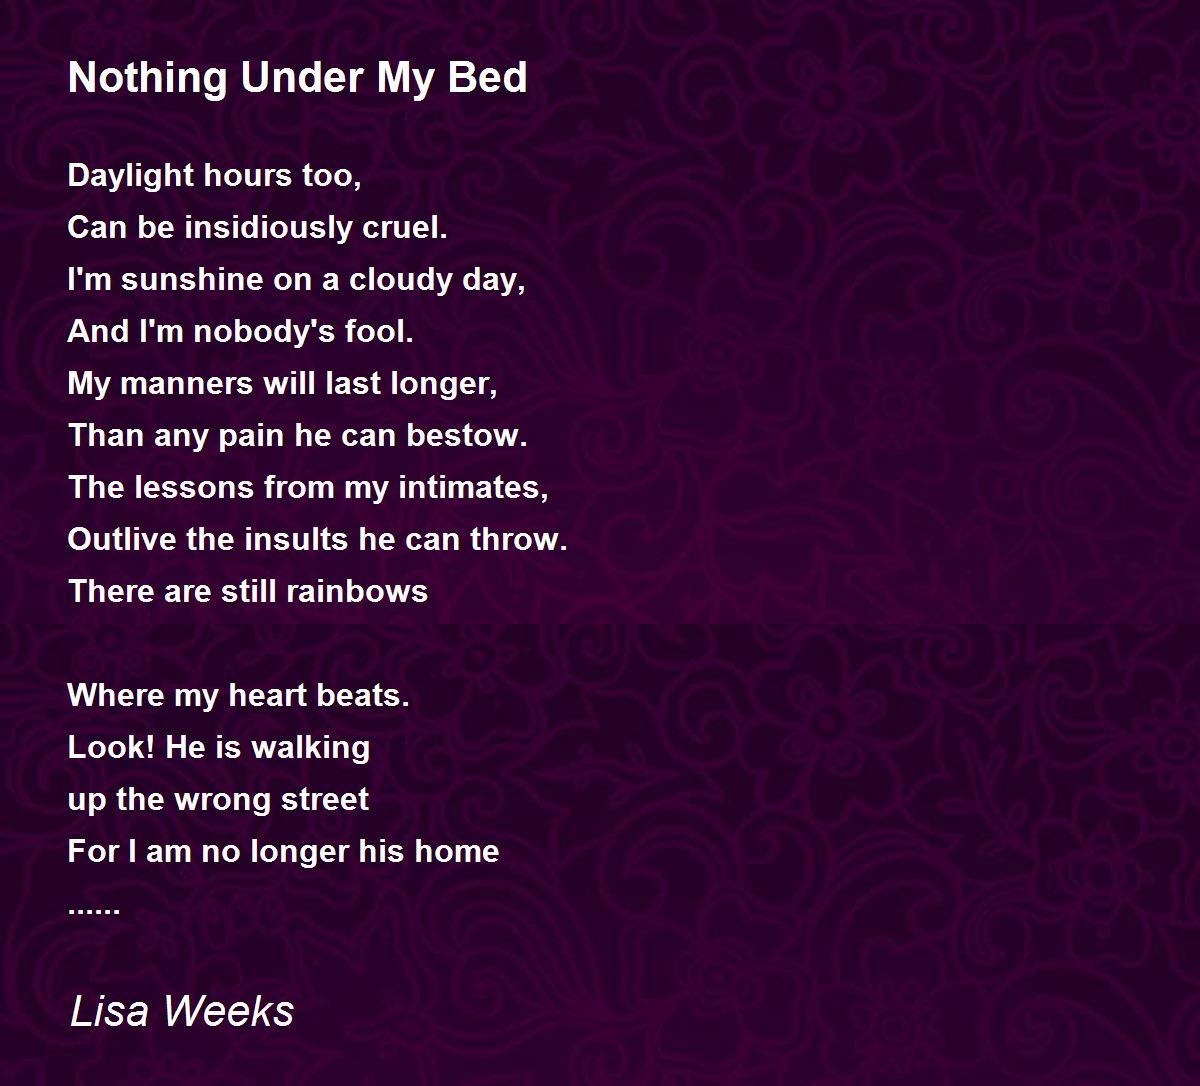 Nothing Under My Bed - Nothing Under My Bed Poem by Lisa Weeks